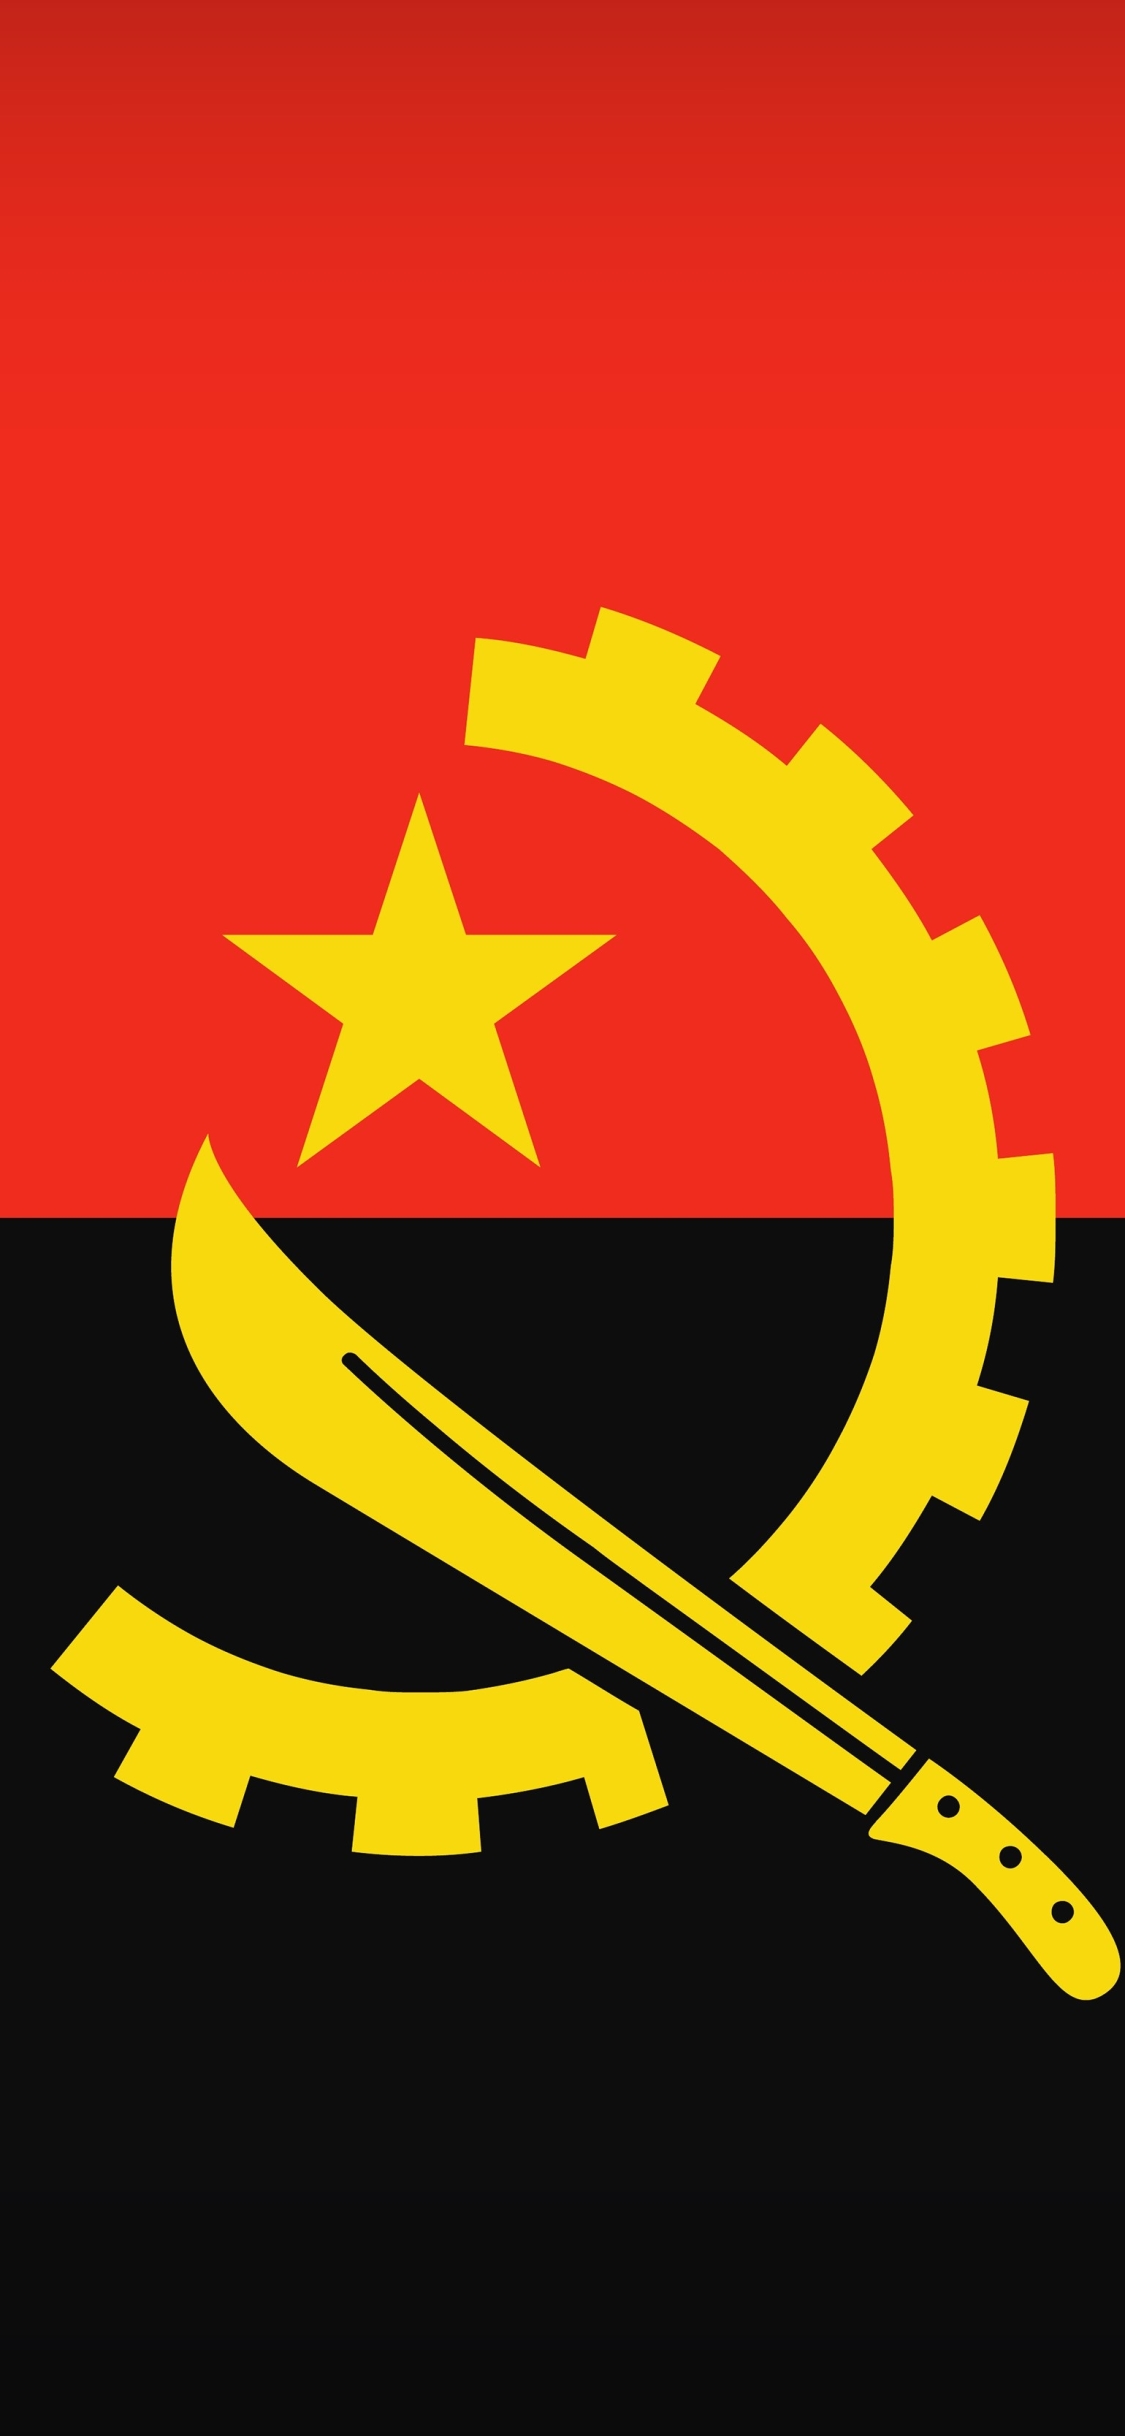 Flag Of Angola Phone Wallpaper by Paul Brennan